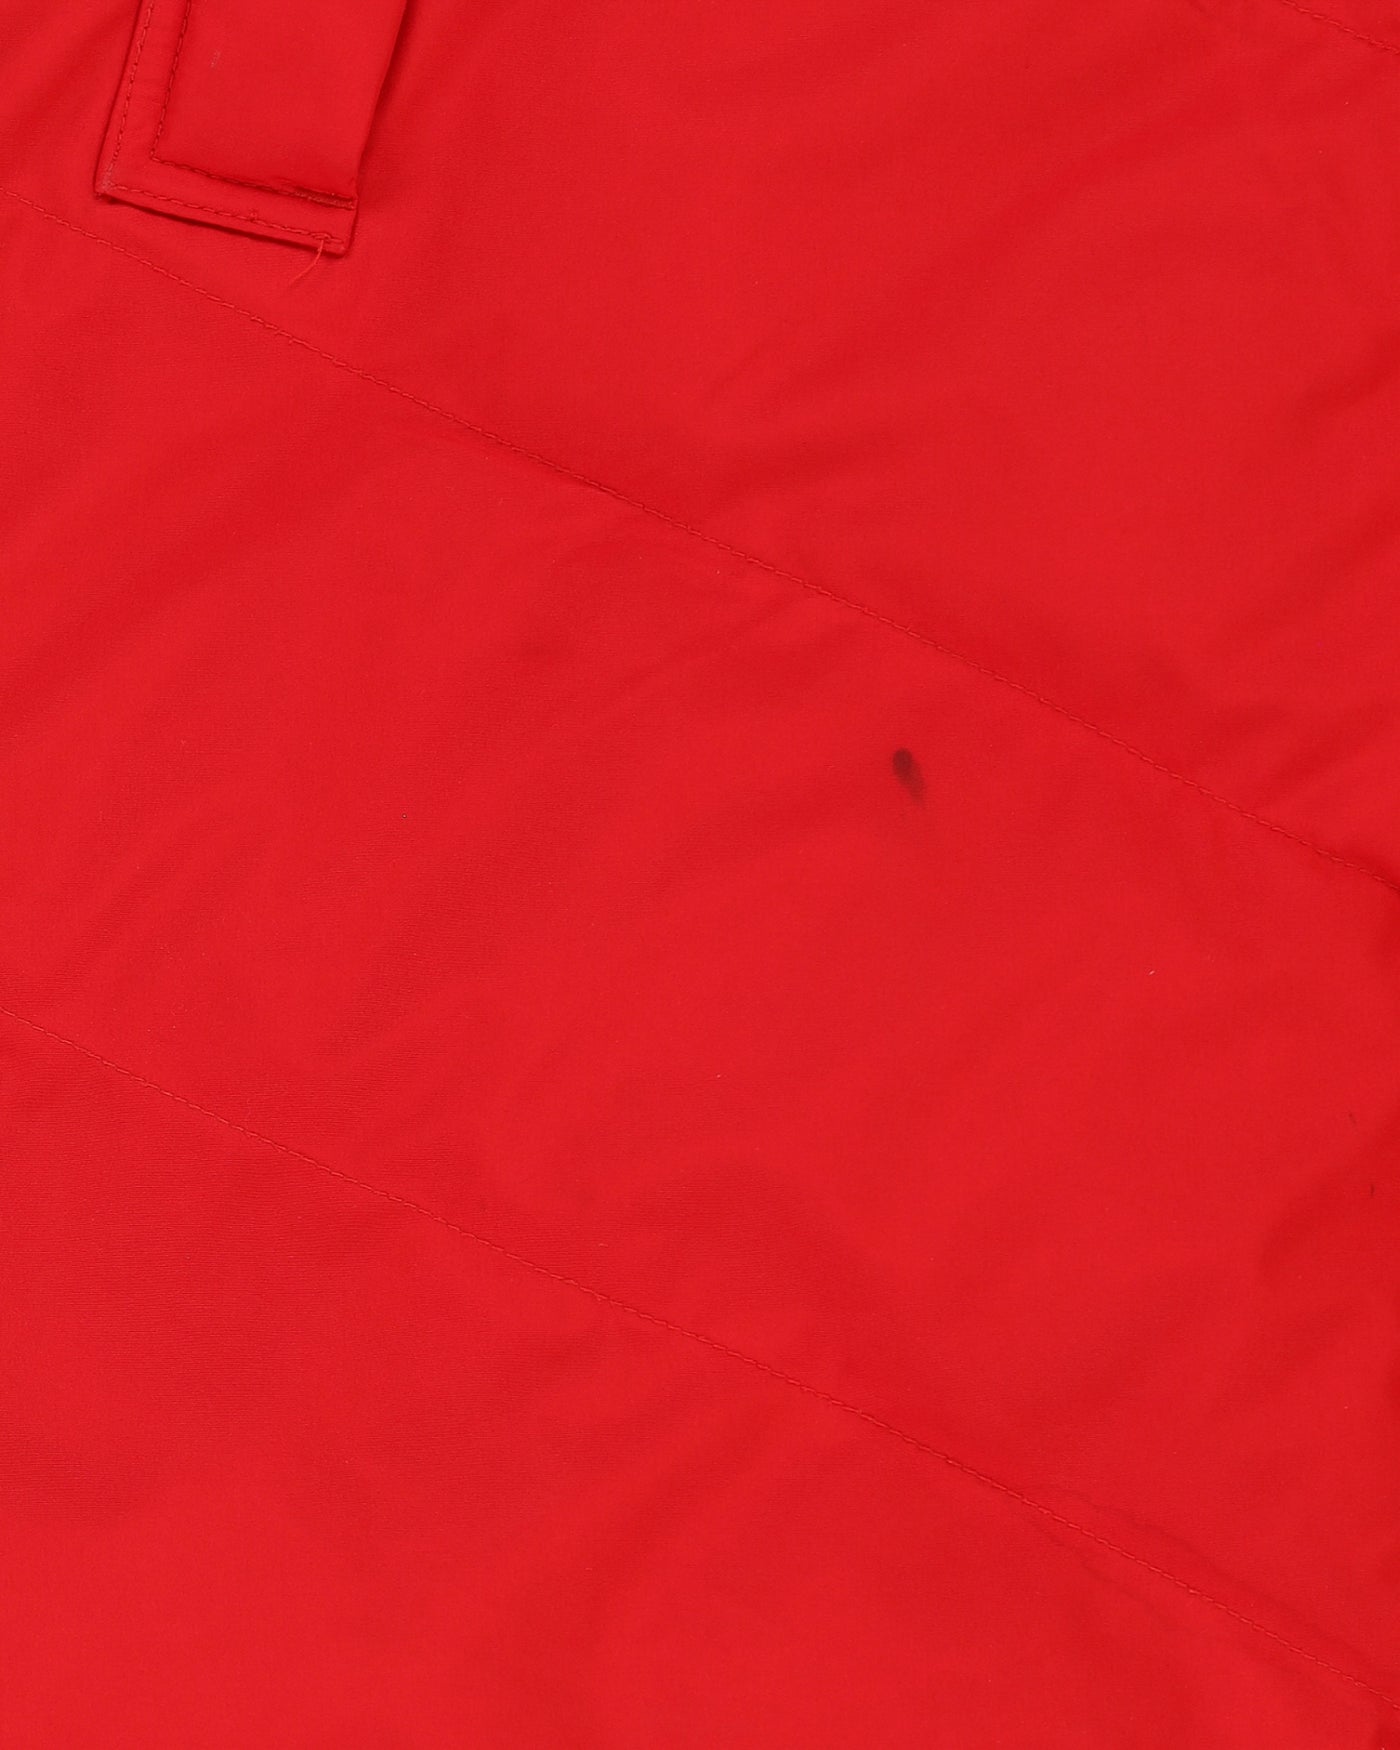 Helly Hansen Red Parka Puffer Jacket - XL